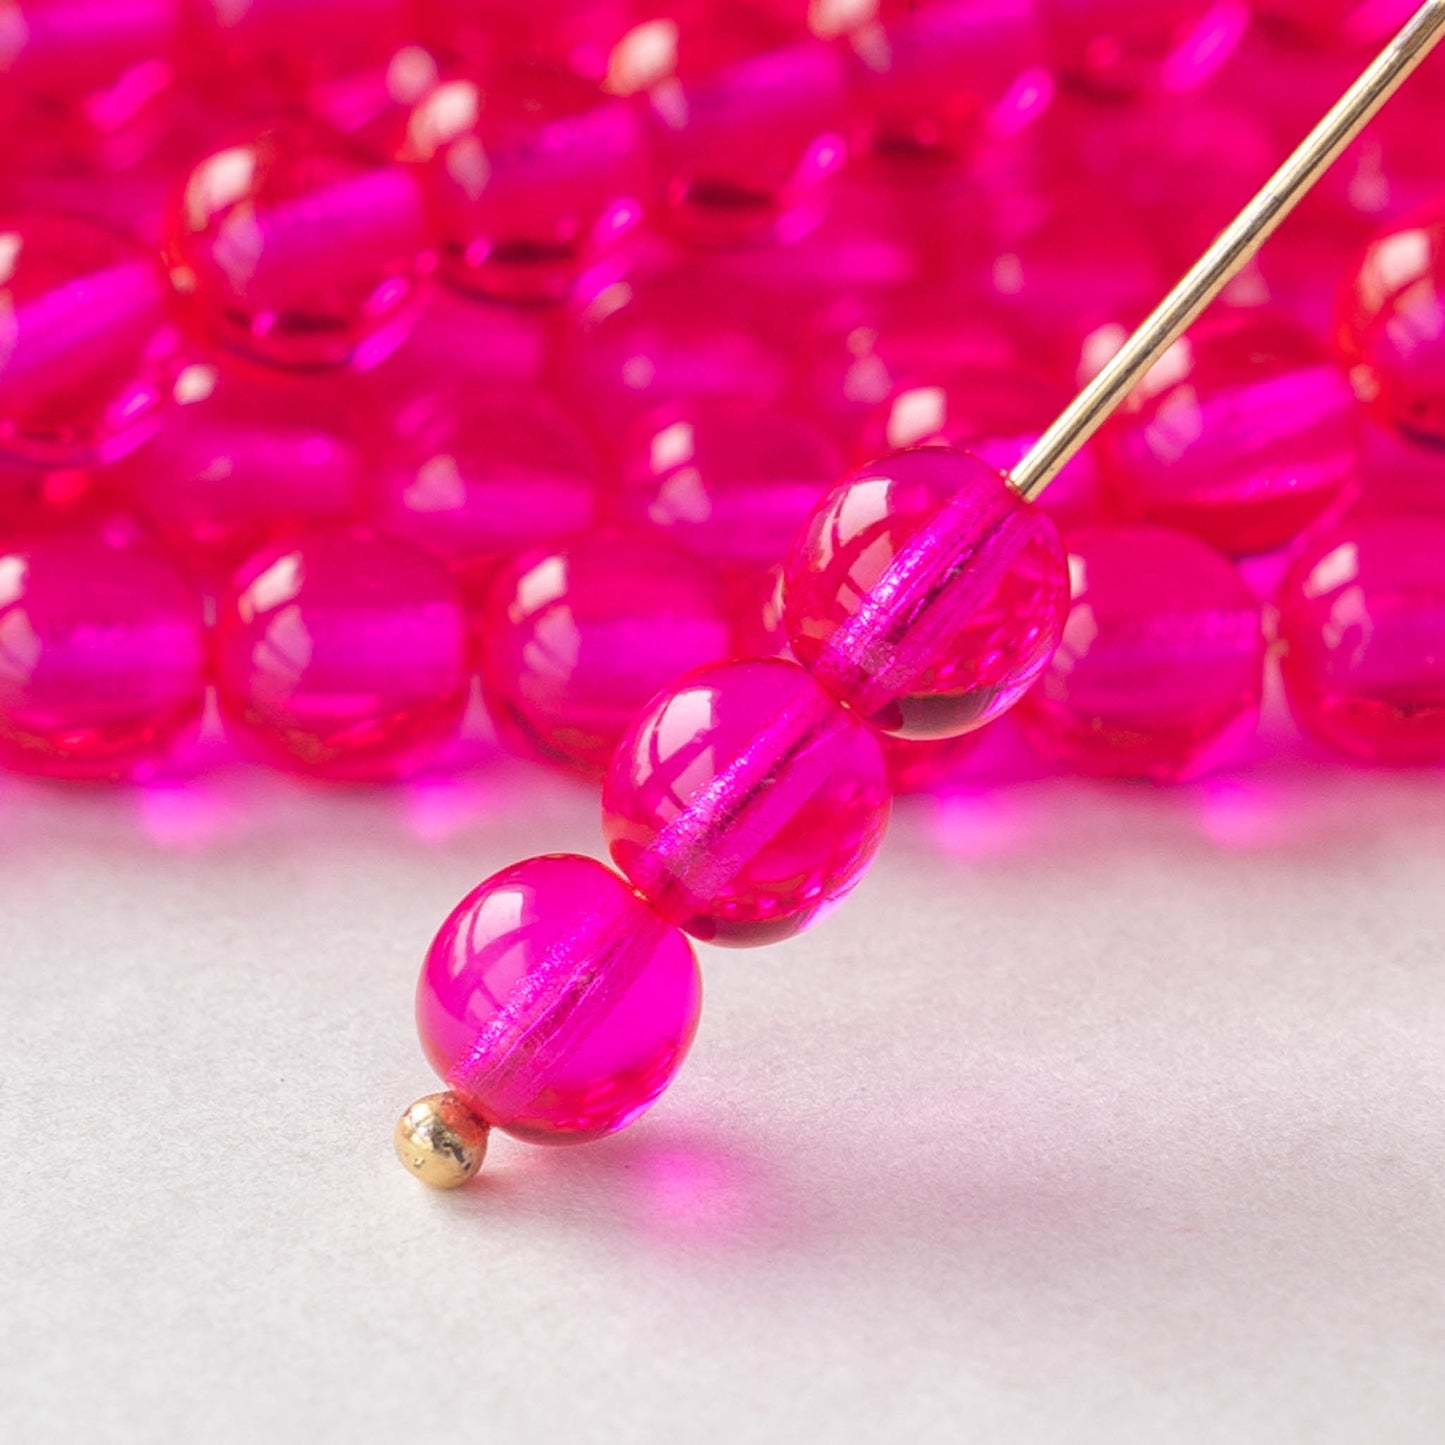 6mm Round Glass Beads - Hot Pink - 50 beads